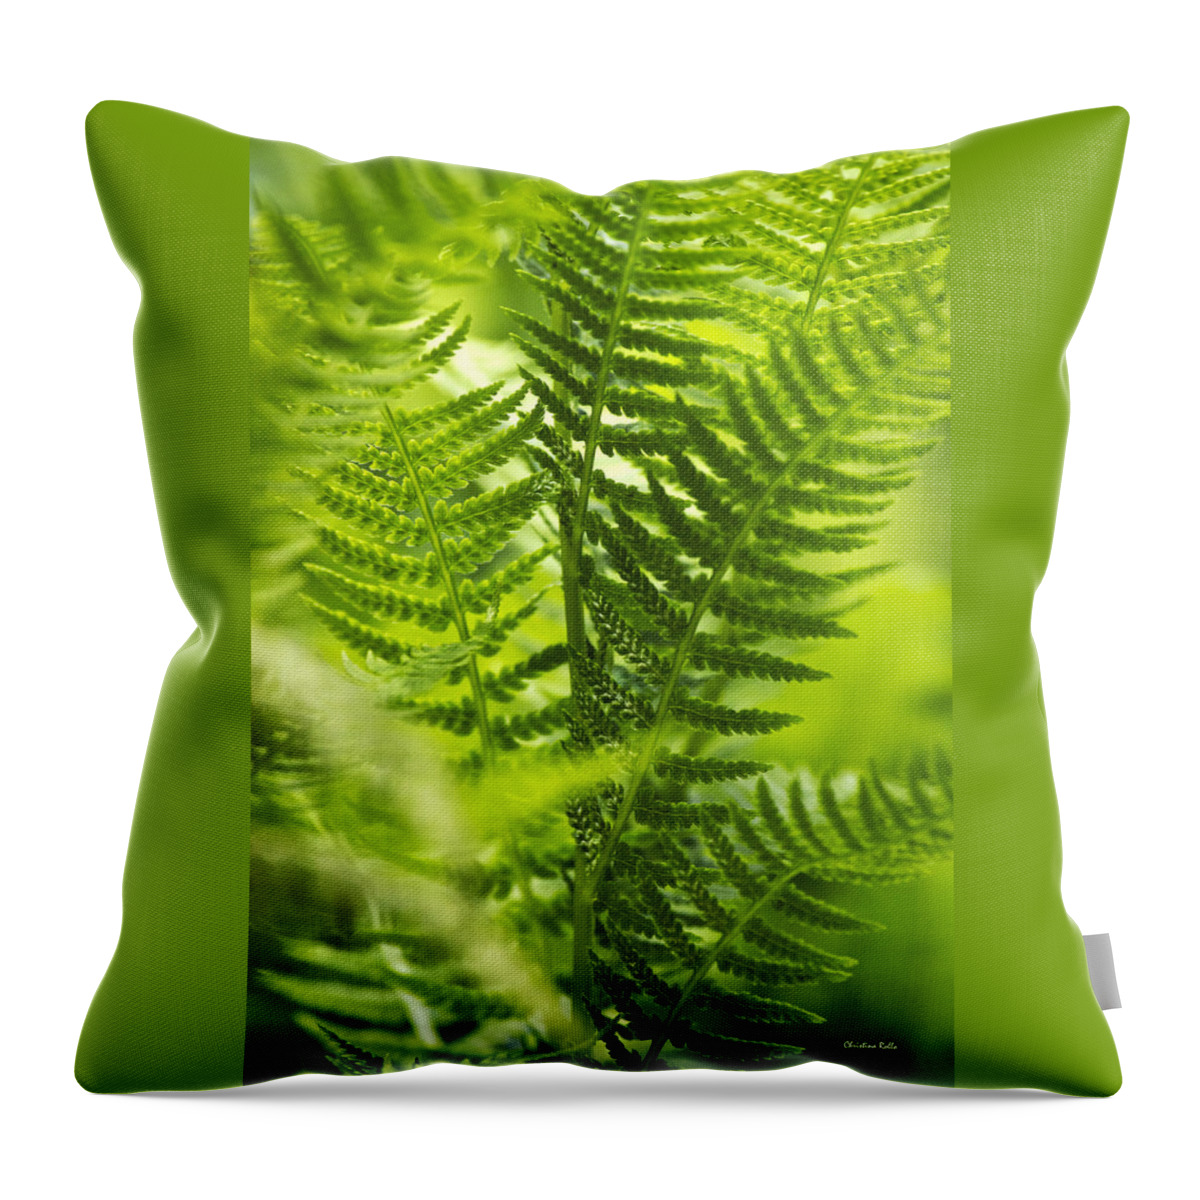 Fern Throw Pillow featuring the photograph Green Fern Art by Christina Rollo